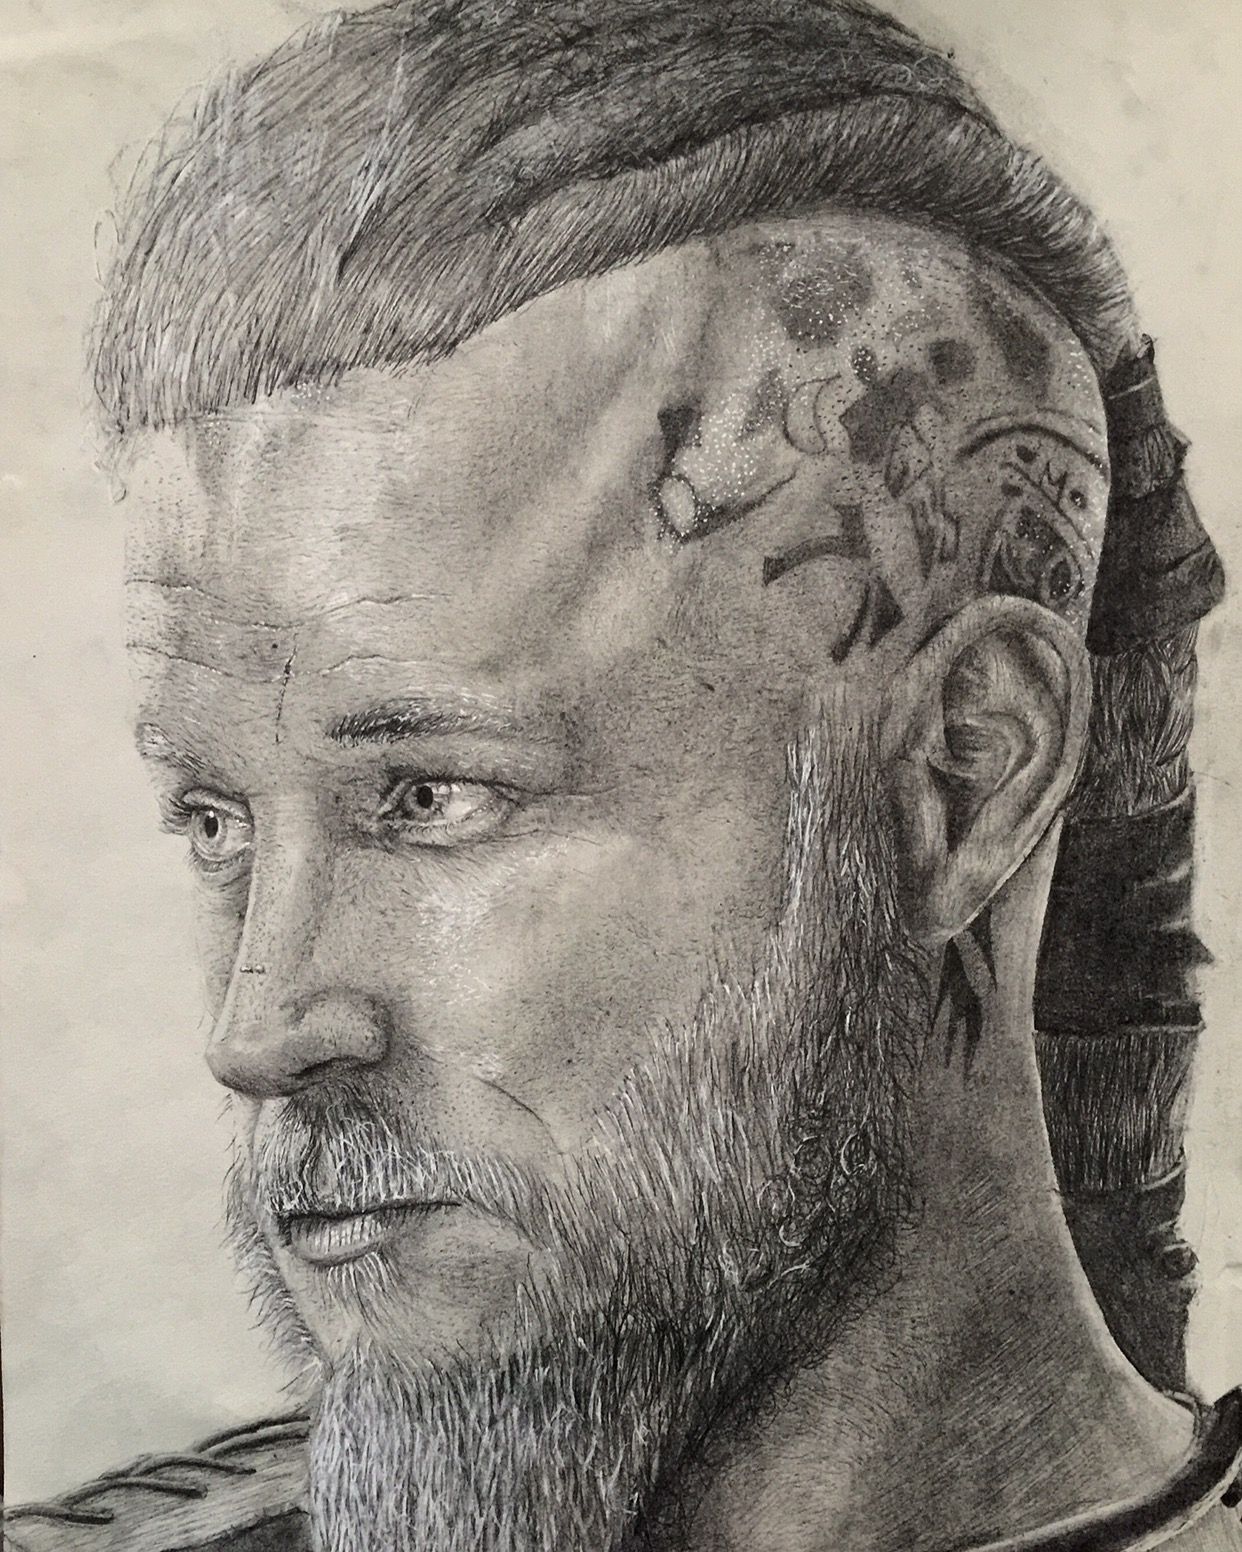 Ragnar Lothbrok hairstyle Tutorial | Vikings | INDIA - YouTube